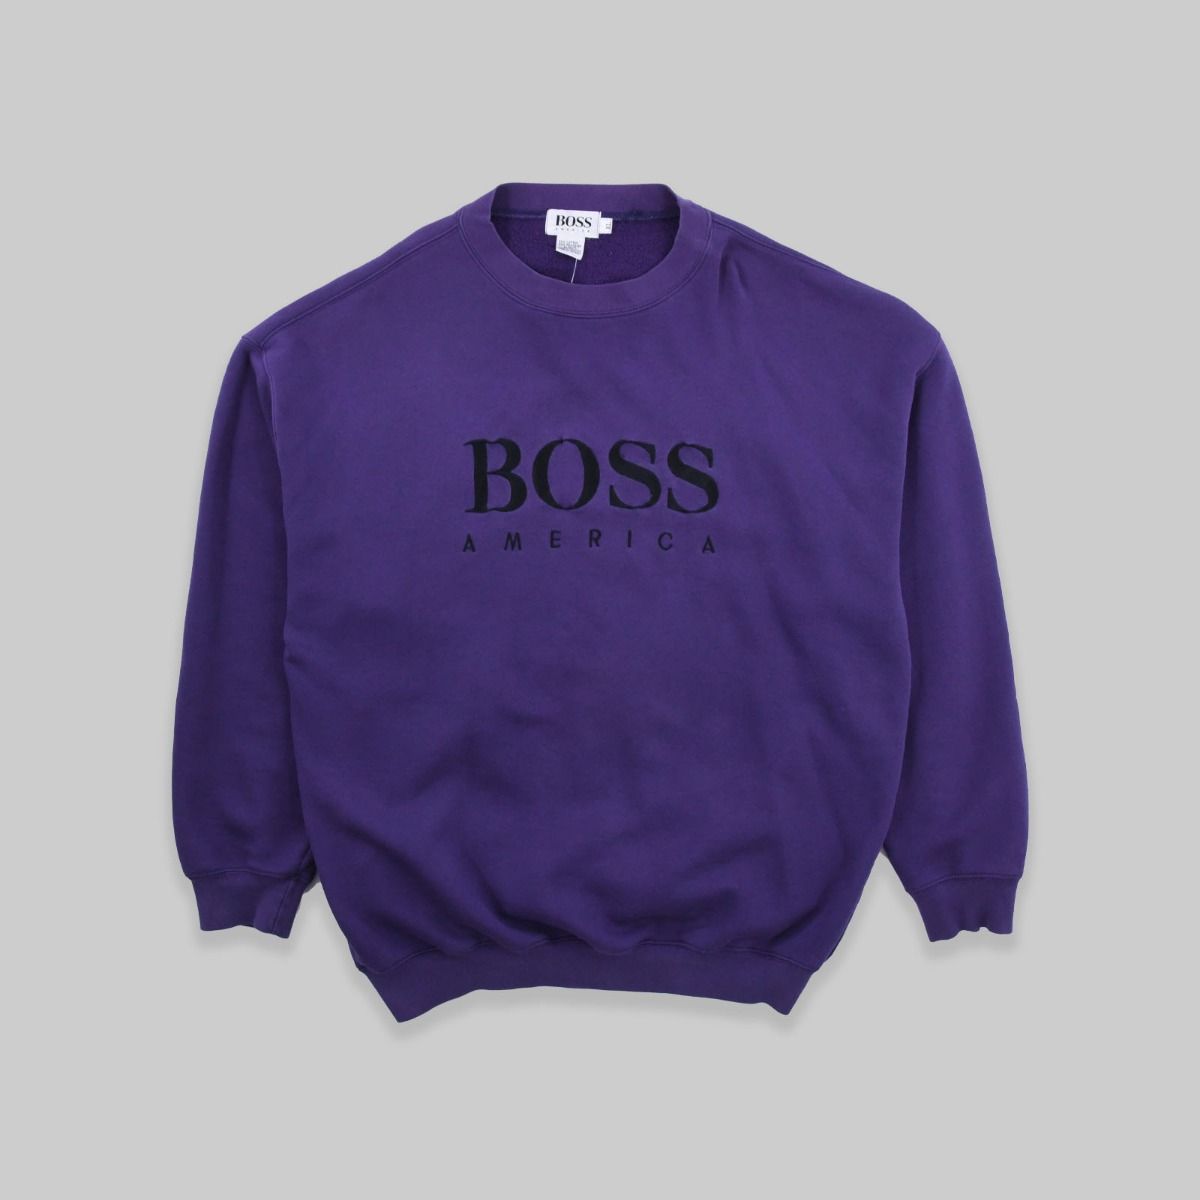 Boss America Sweatshirt